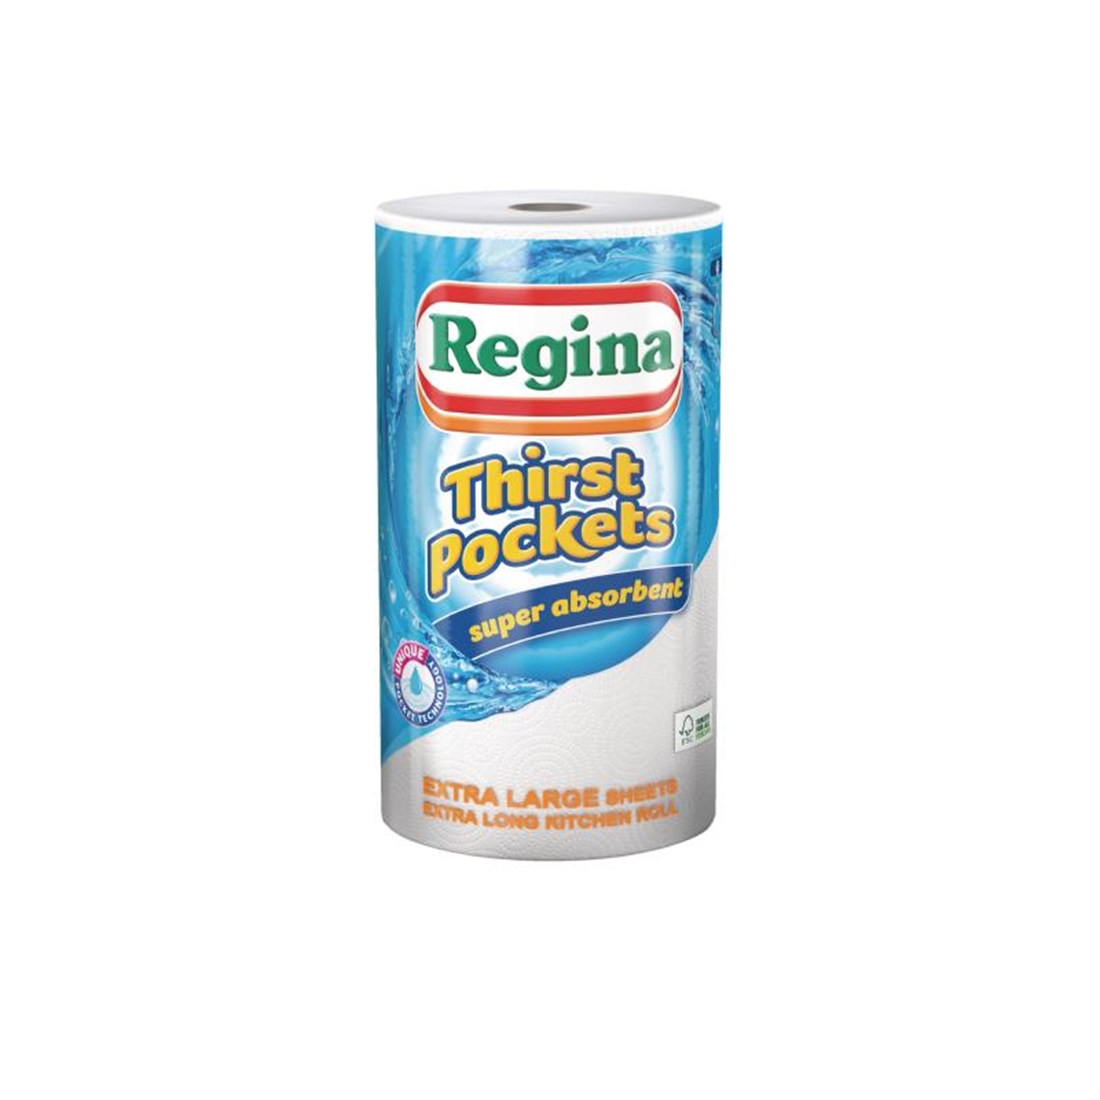 Regina Thirst pockets Kitchen Roll 100 sheets (Pack of 6) - CT325